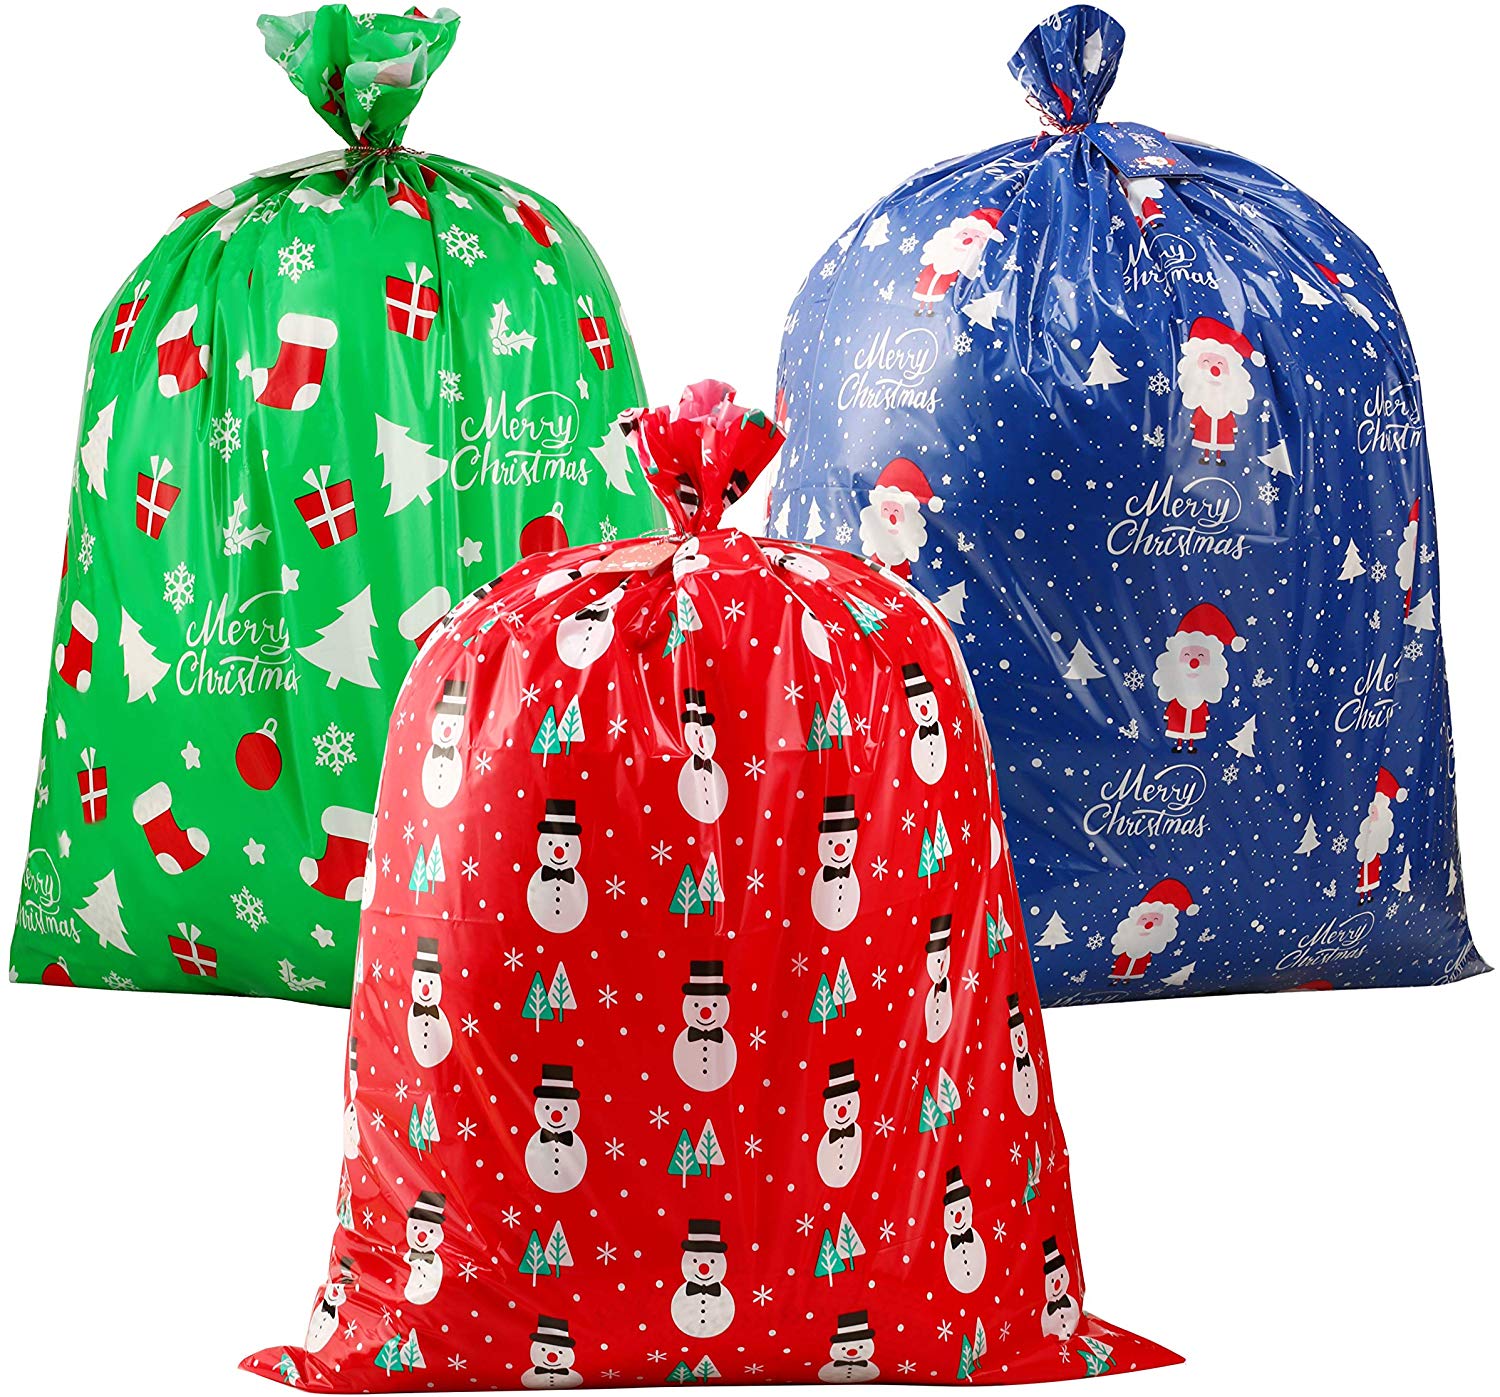 CCINEE Christmas Giant Gift Bags